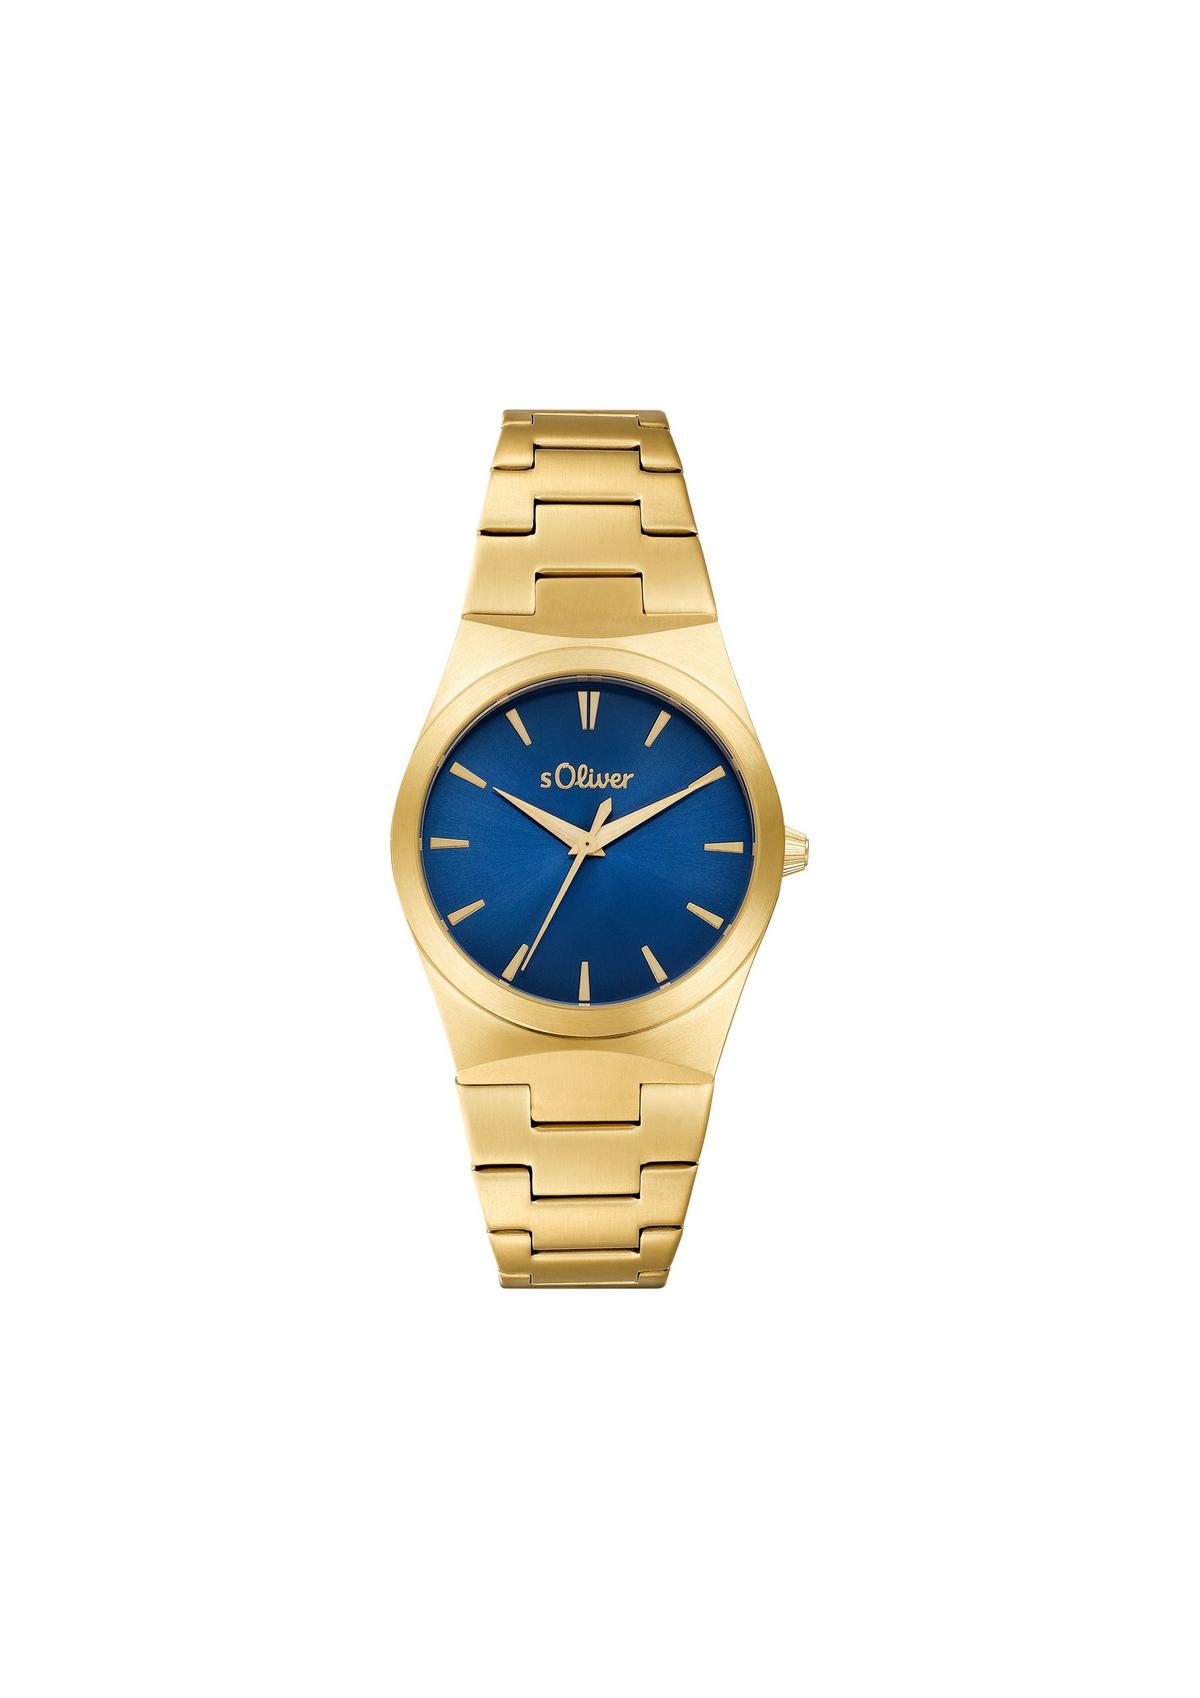 s.Oliver Goldene Edelstahl-Armbanduhr mit blauem Ziffernblatt